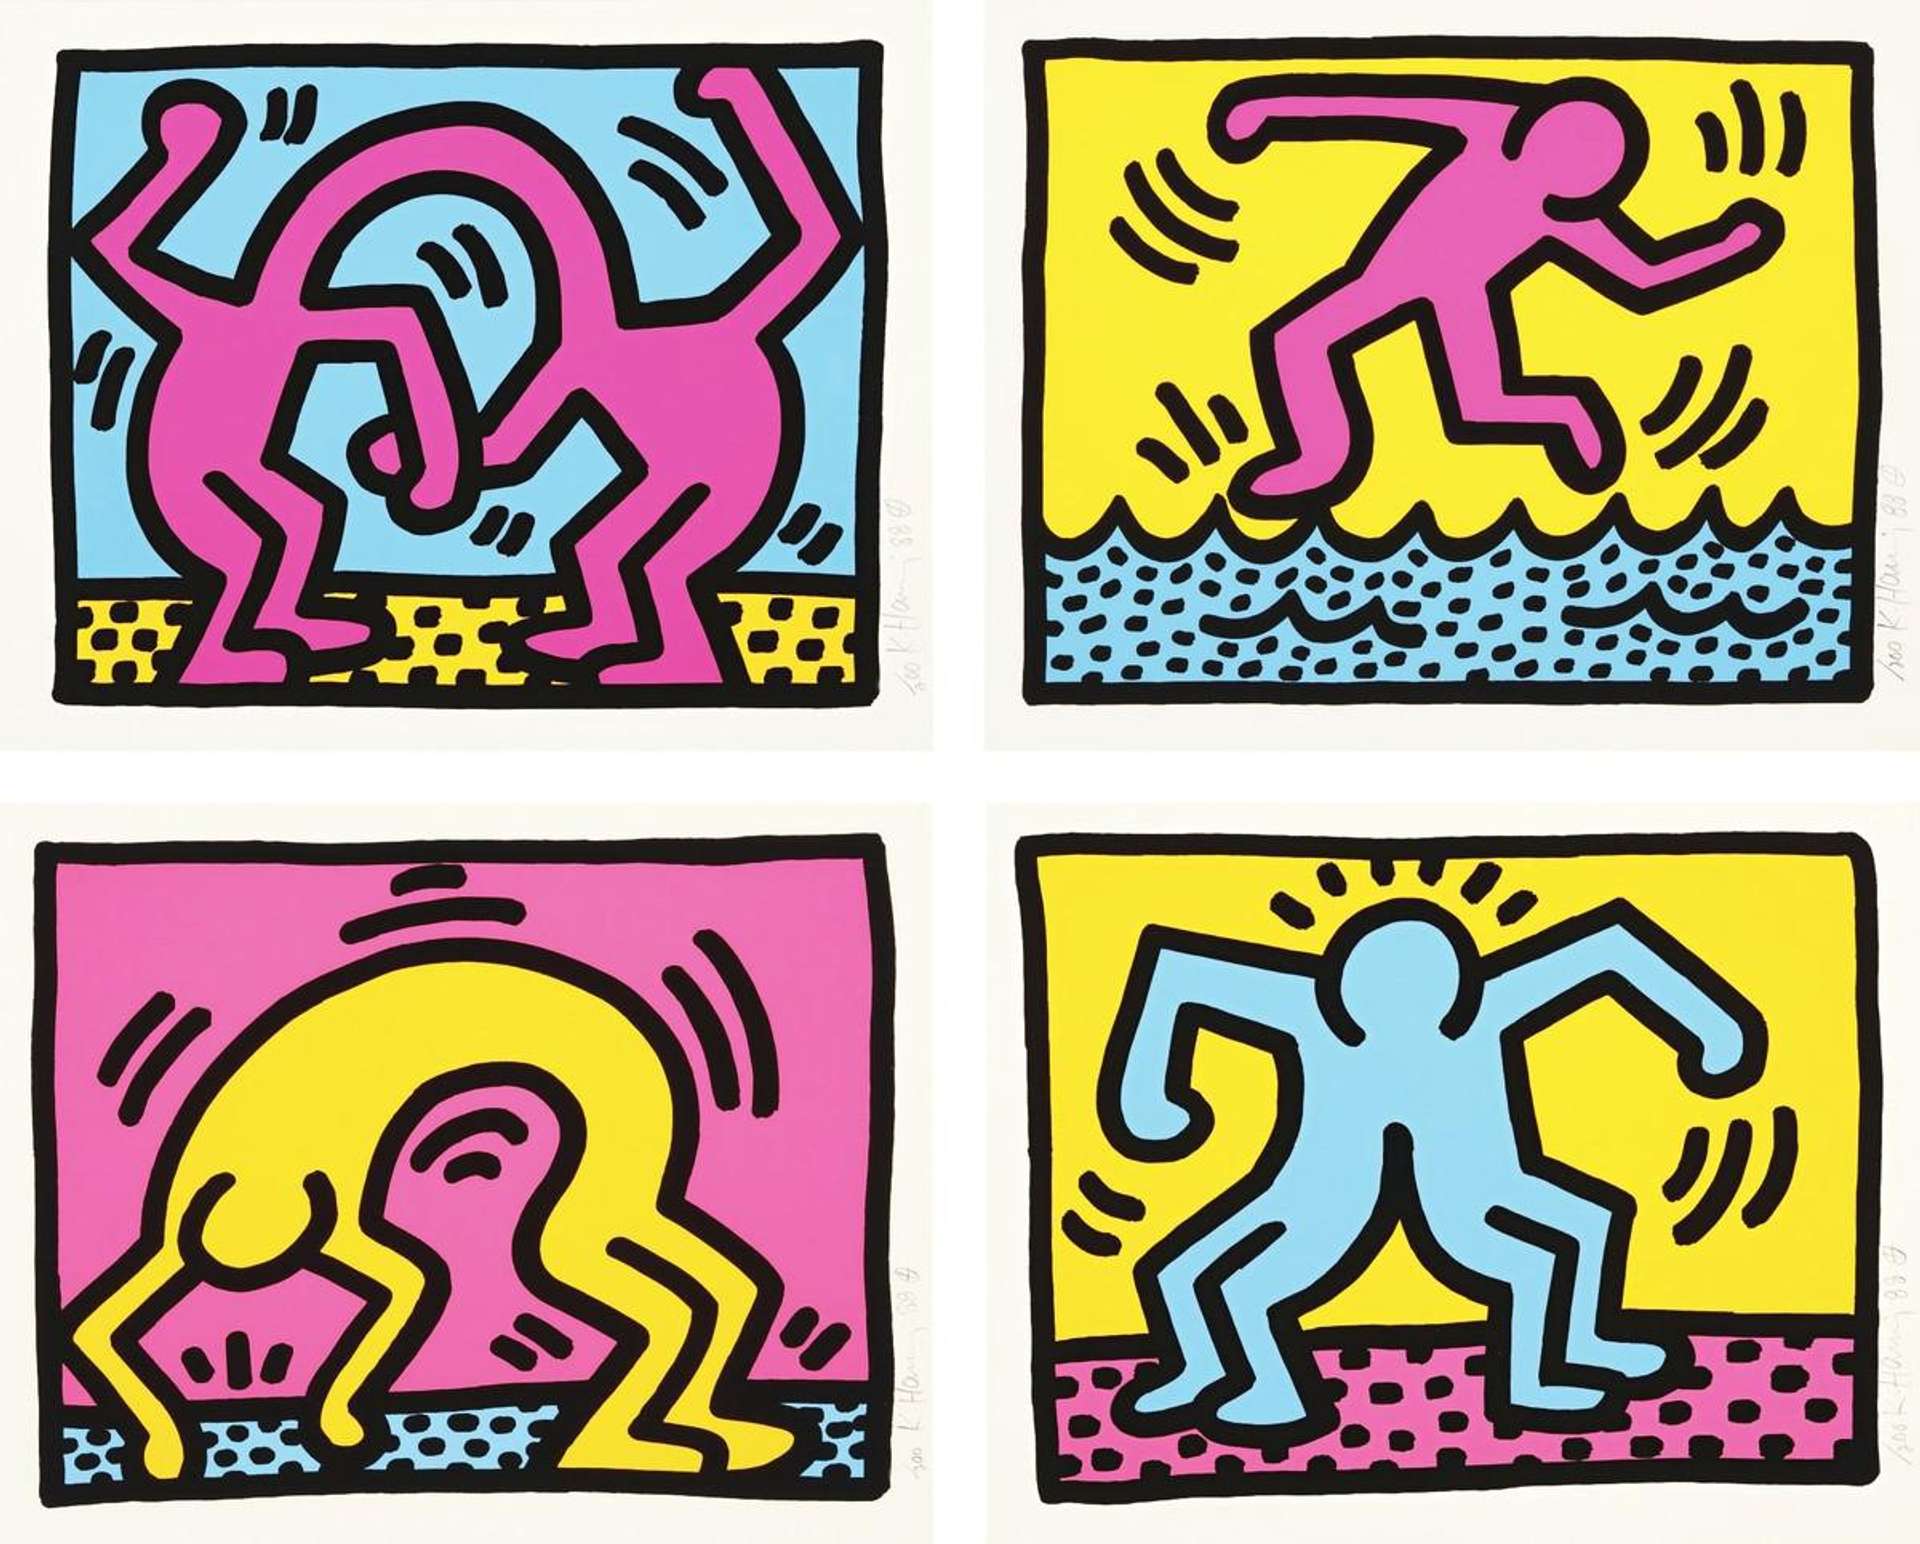 Pop Shop II (complete set) - Signed Print by Keith Haring 1988 - MyArtBroker